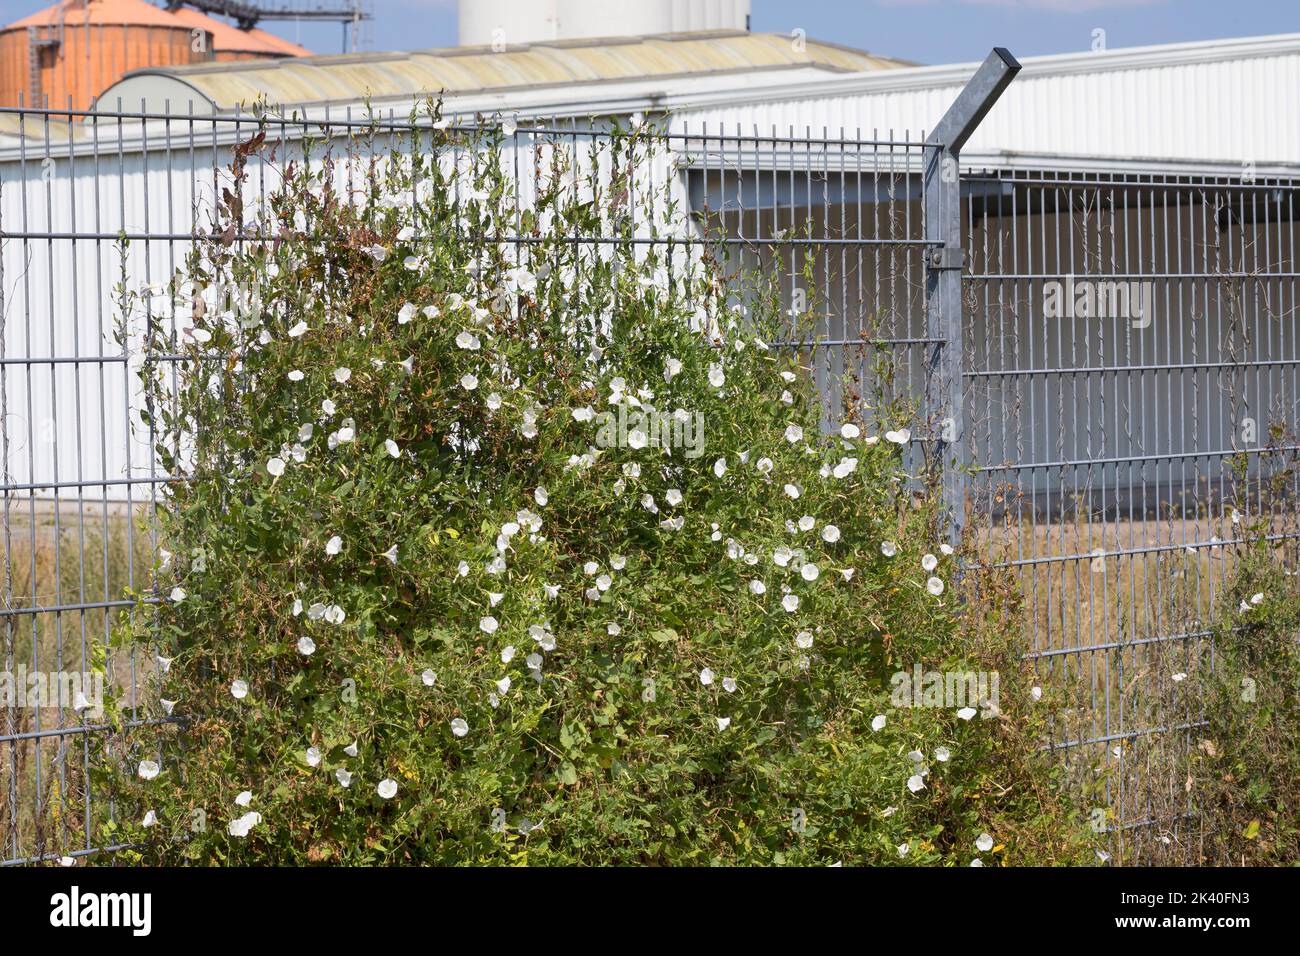 Campo indweed, campo mattina-gloria, piccolo indweed (Convolvulus arvensis), intrecciando su una recinzione, Germania Foto Stock